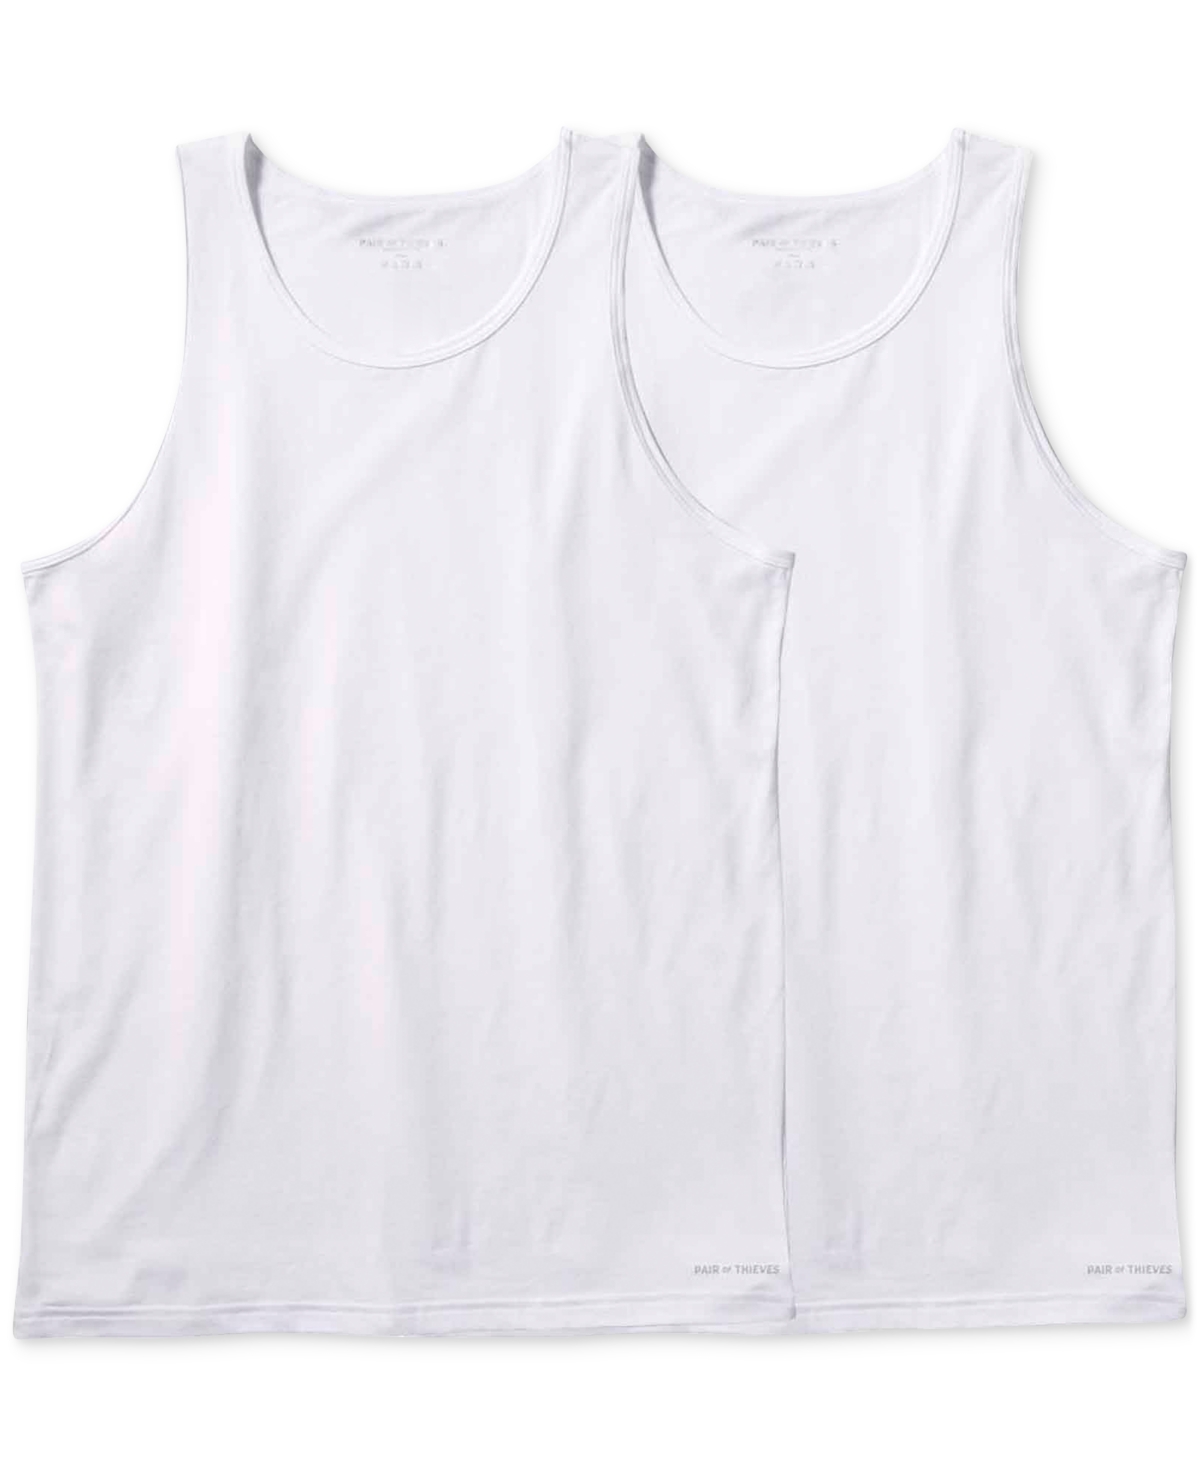 Men's SuperSoft Cotton Stretch Tank Undershirt 2 Pack - White